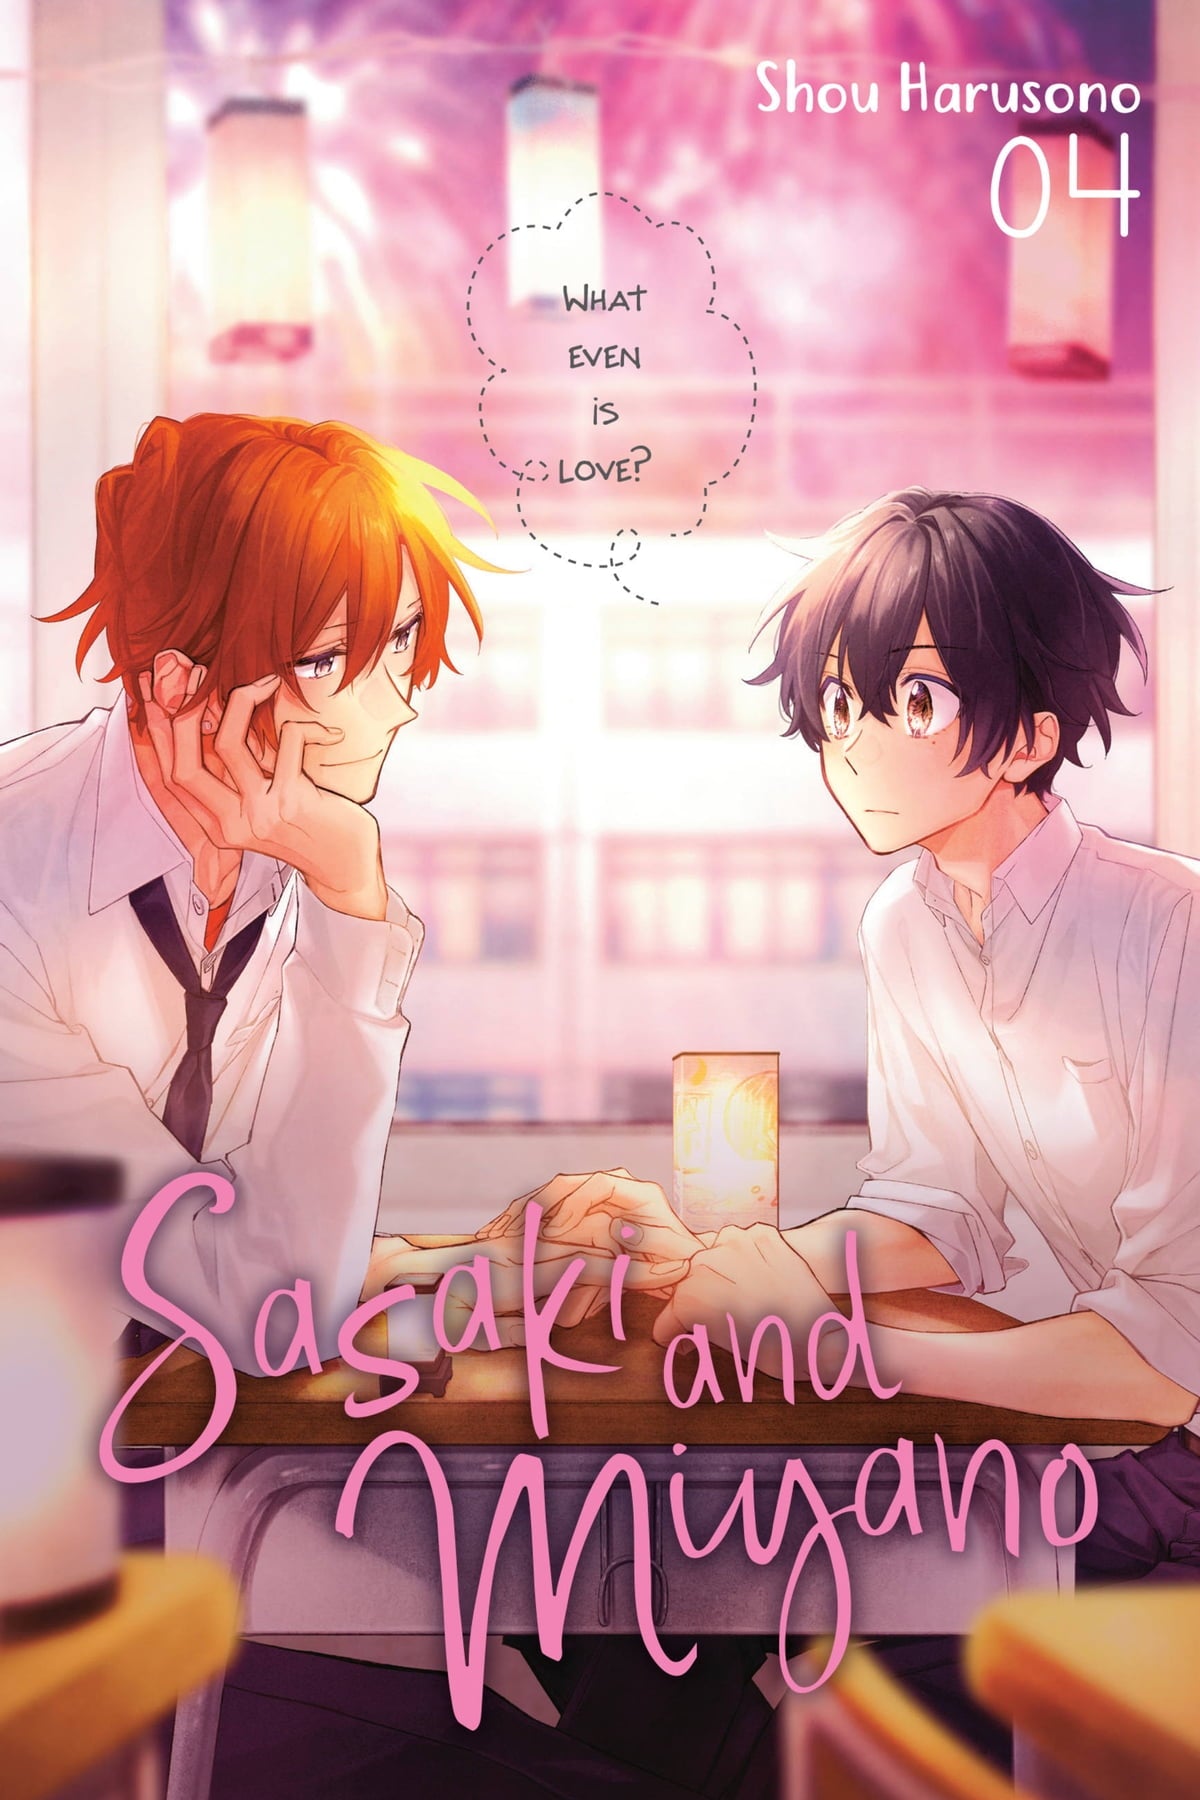 Sasaki and Miyano (Manga) (English)